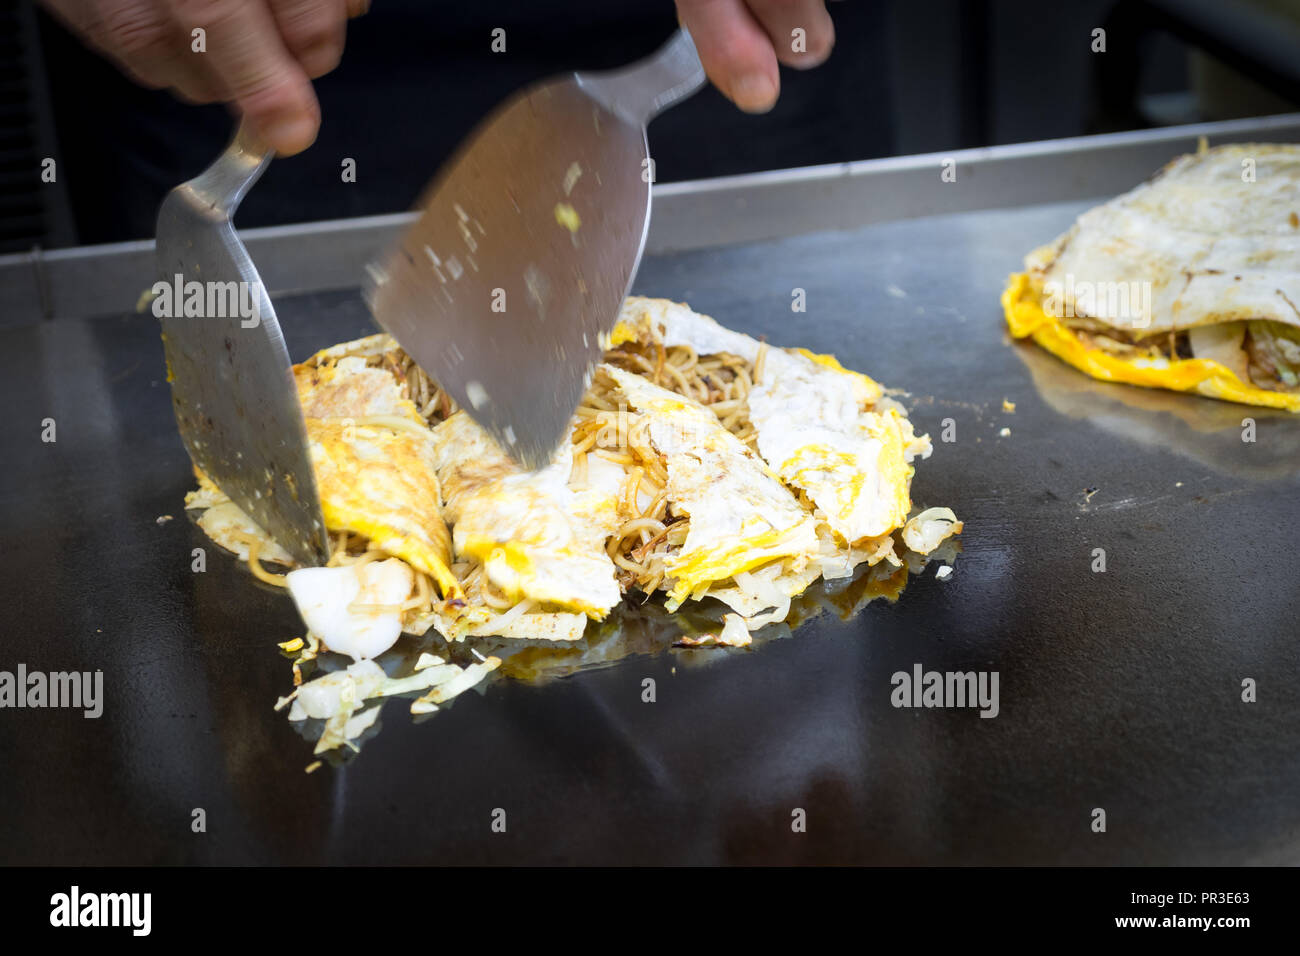 A chef makes Hiroshima style okonomiyaki at Okonomimura in Hiroshima, Japan. Stock Photo